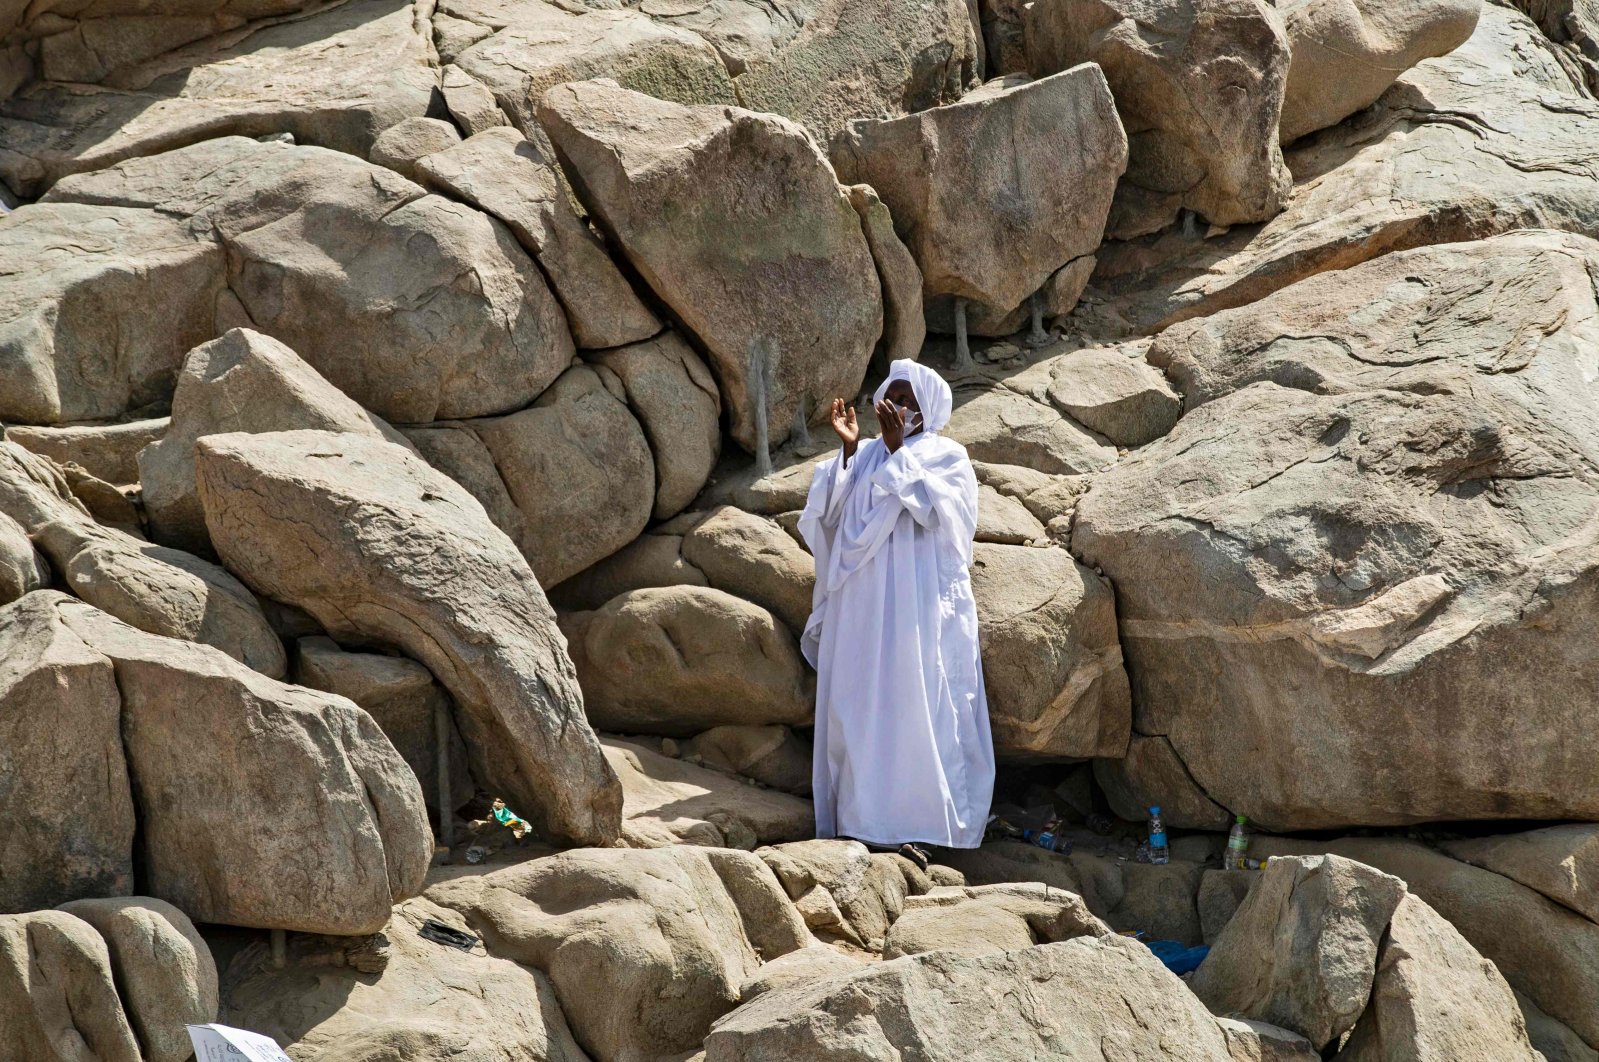 Muslim pilgrims pray at Mountain Arafat for climax of hajj